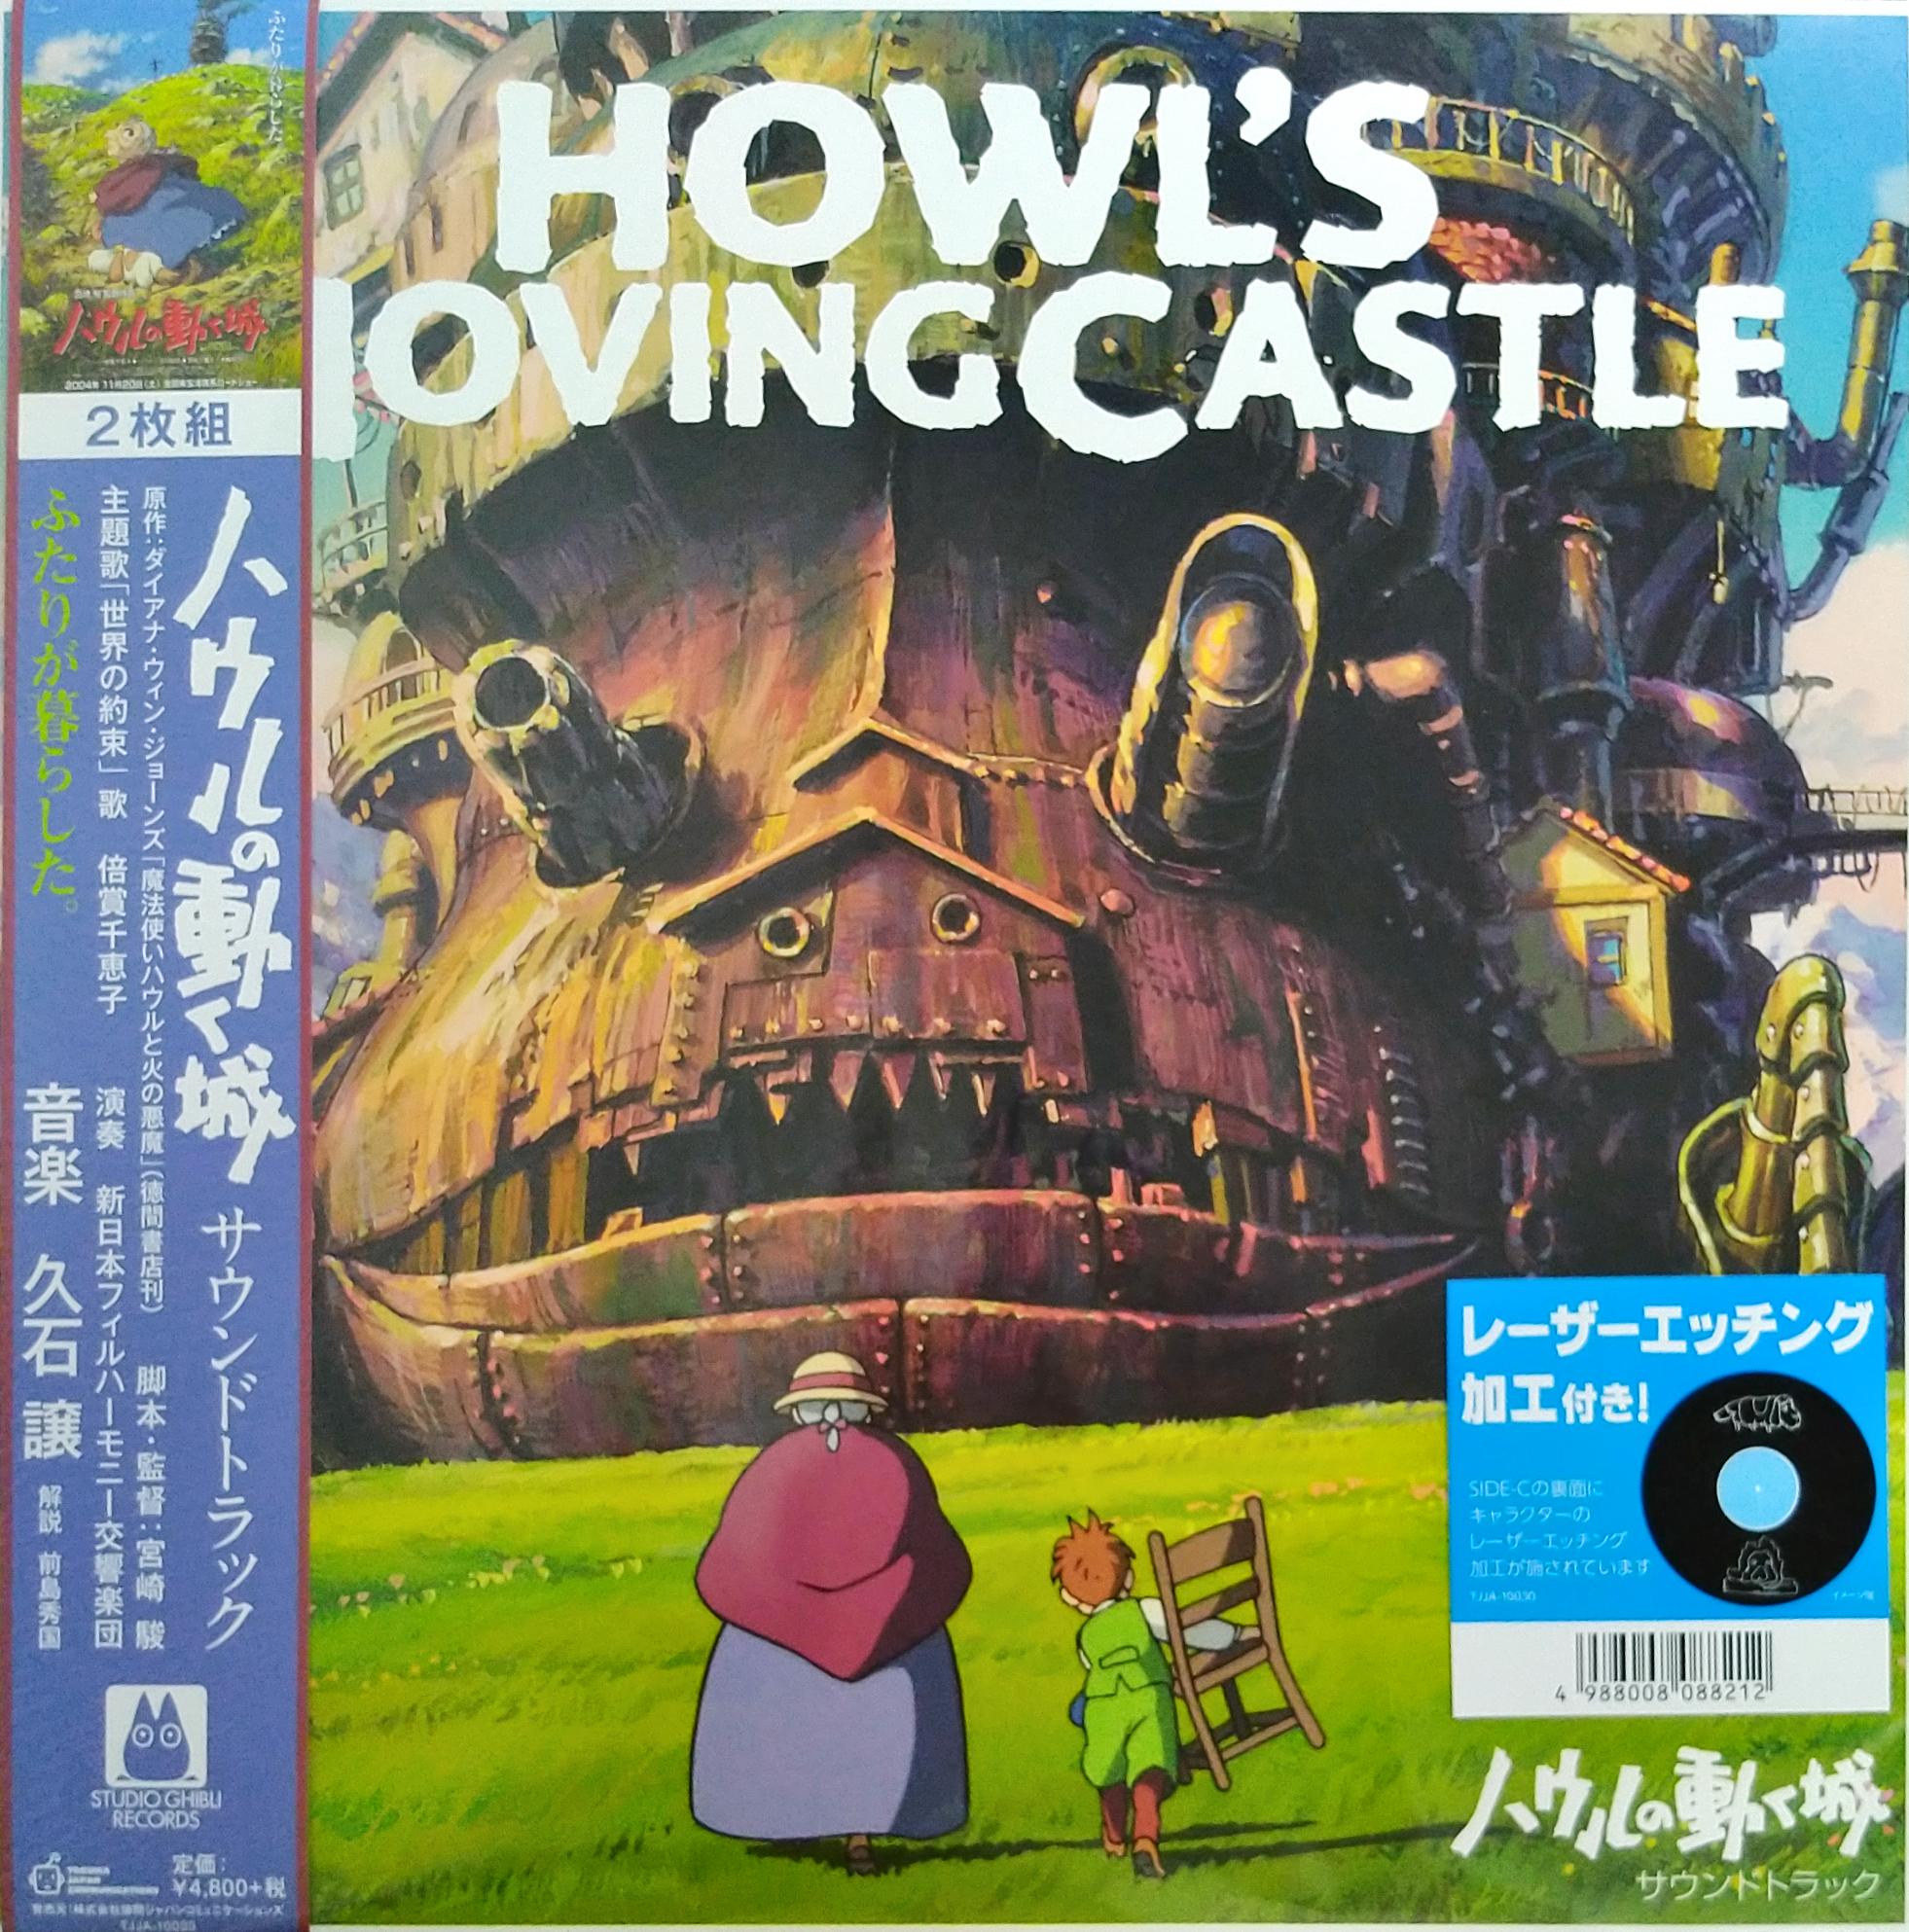 Joe Hisaishi – Howl’s Moving Castle OST Vinyl